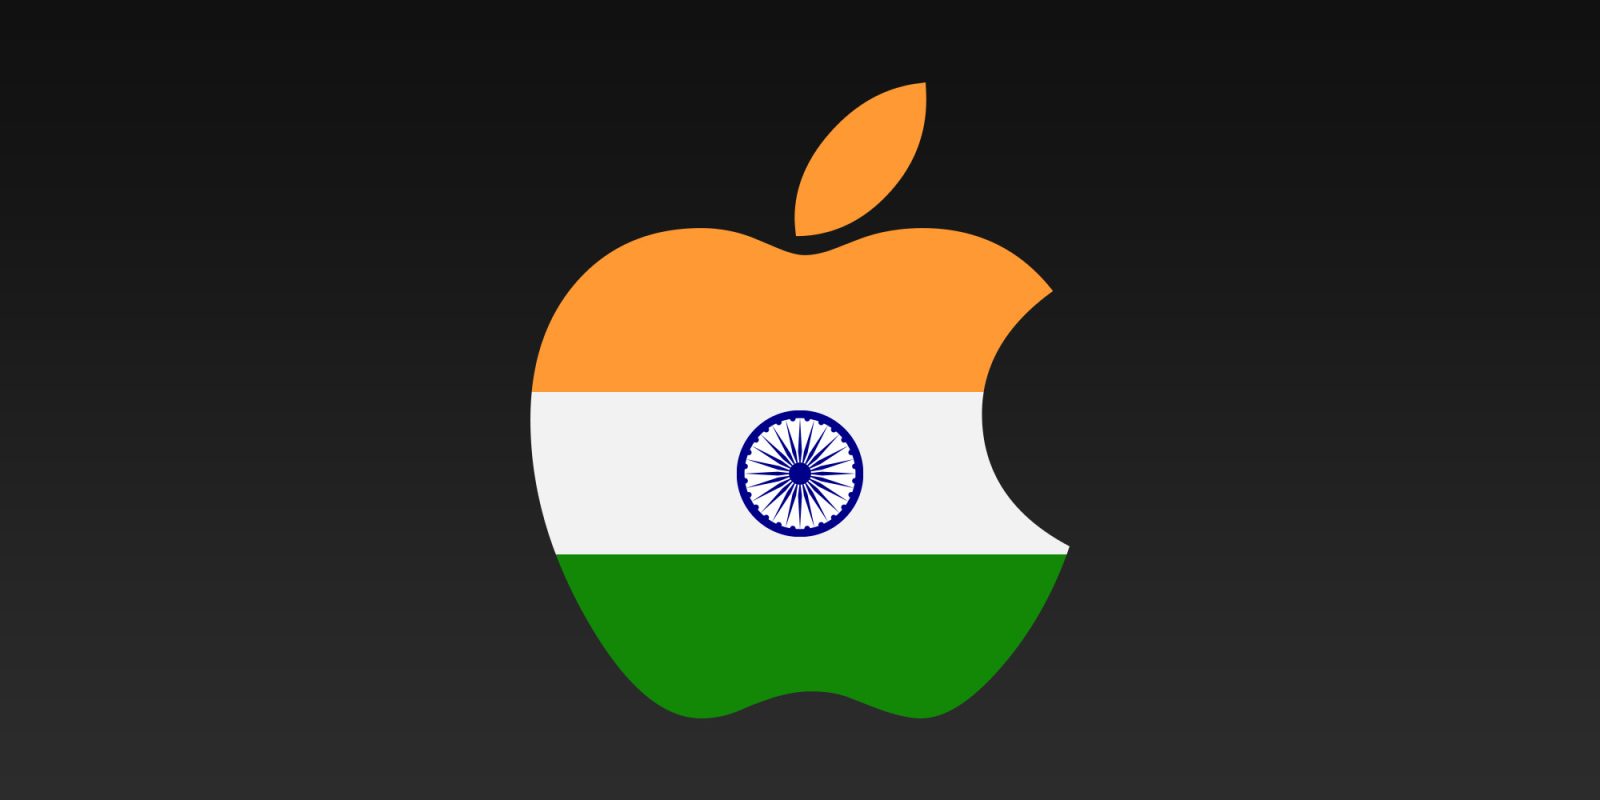 Apple India